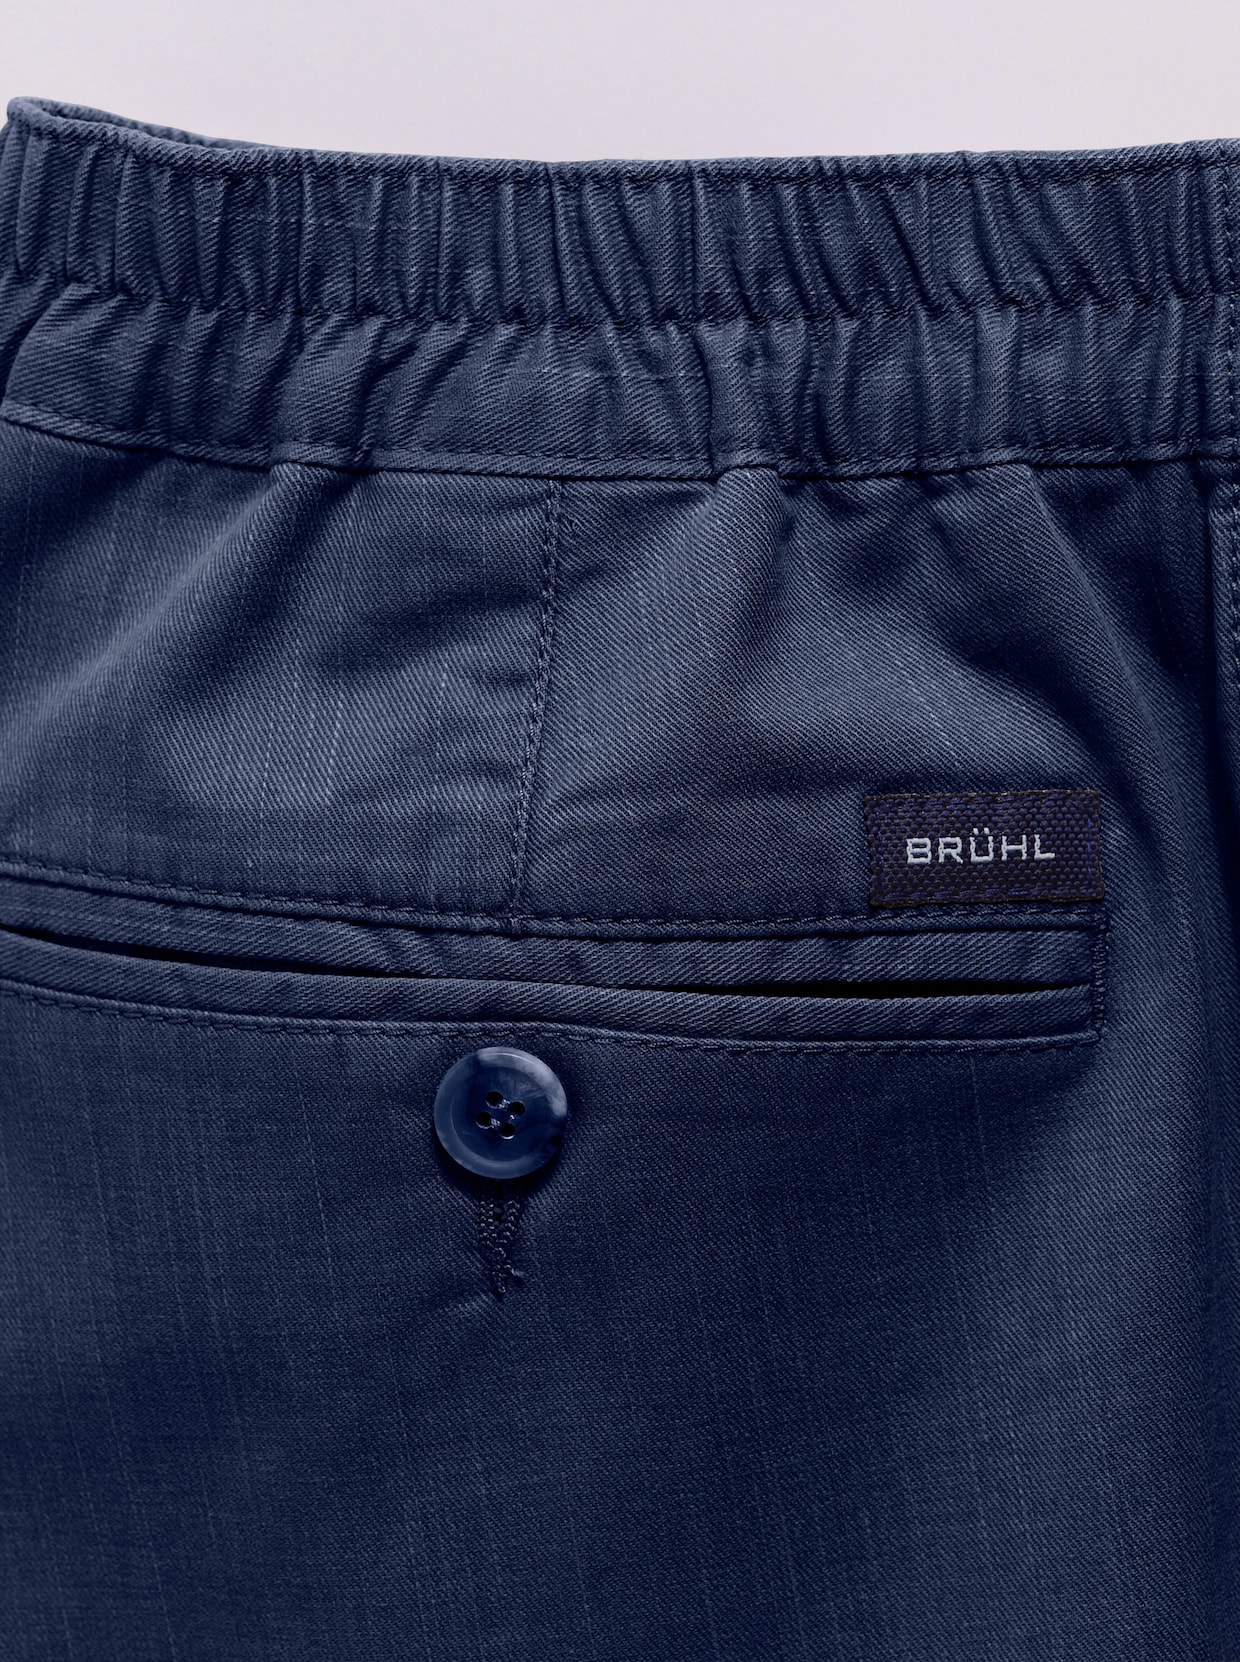 Brühl jeans - blue-stonewashed